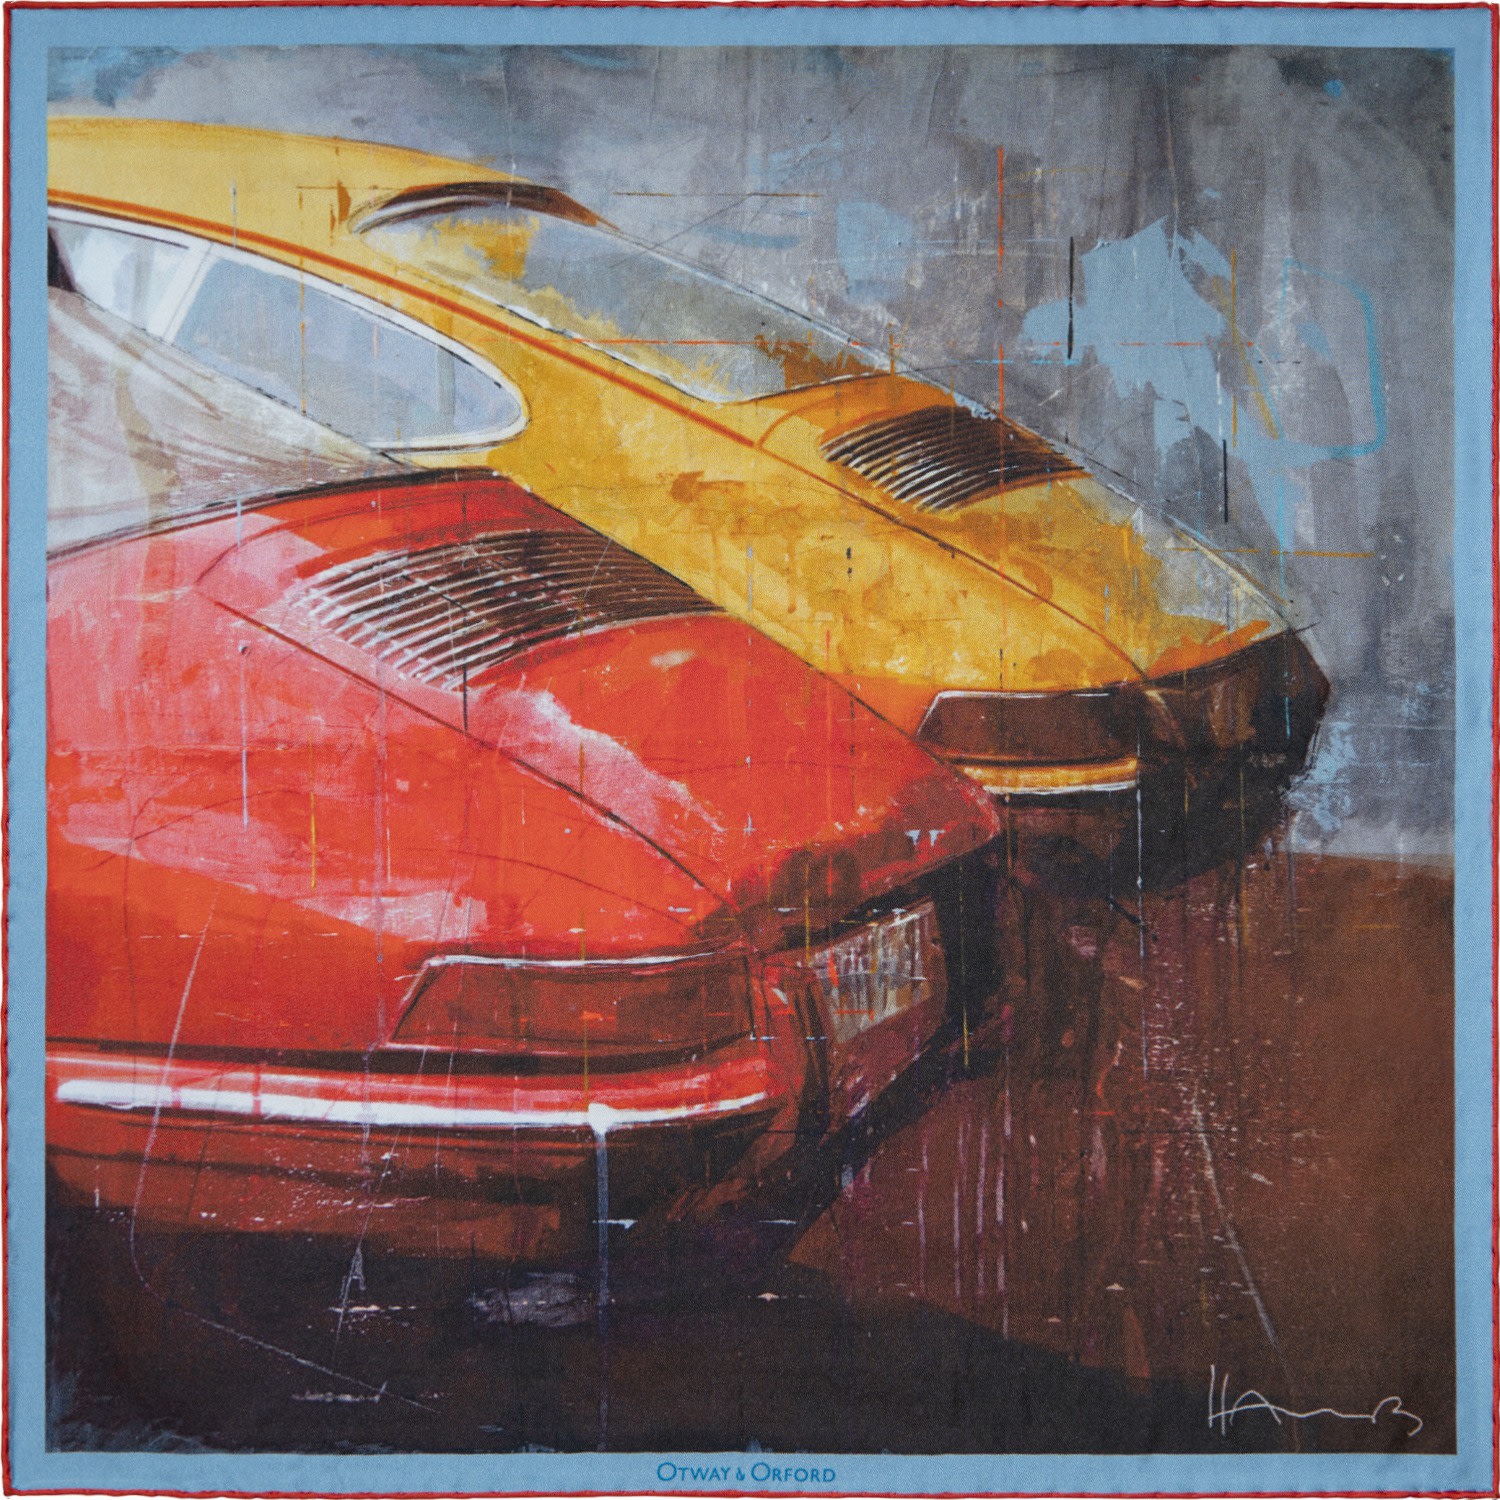 Men’s Yellow / Orange / Red ’Racing Legends’ Sports Cars Silk Pocket Square. Medium-Size. Otway & Orford